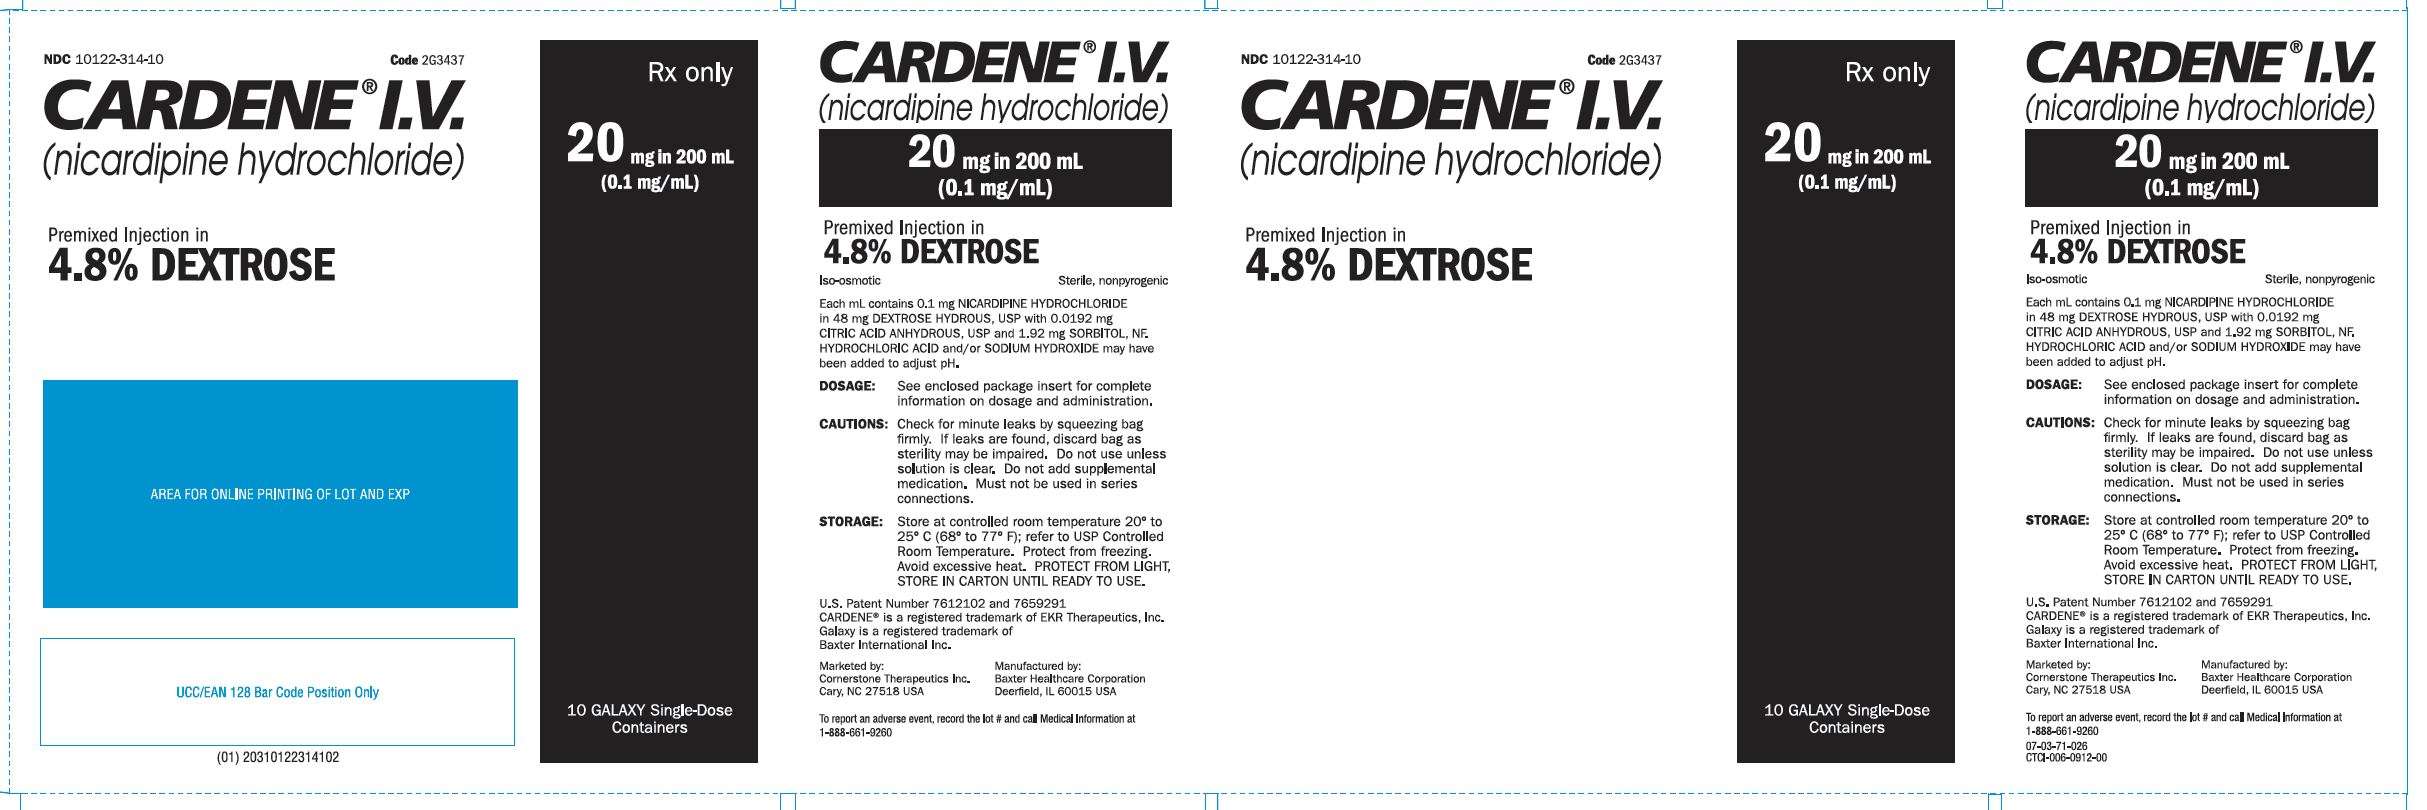 Cardene IV